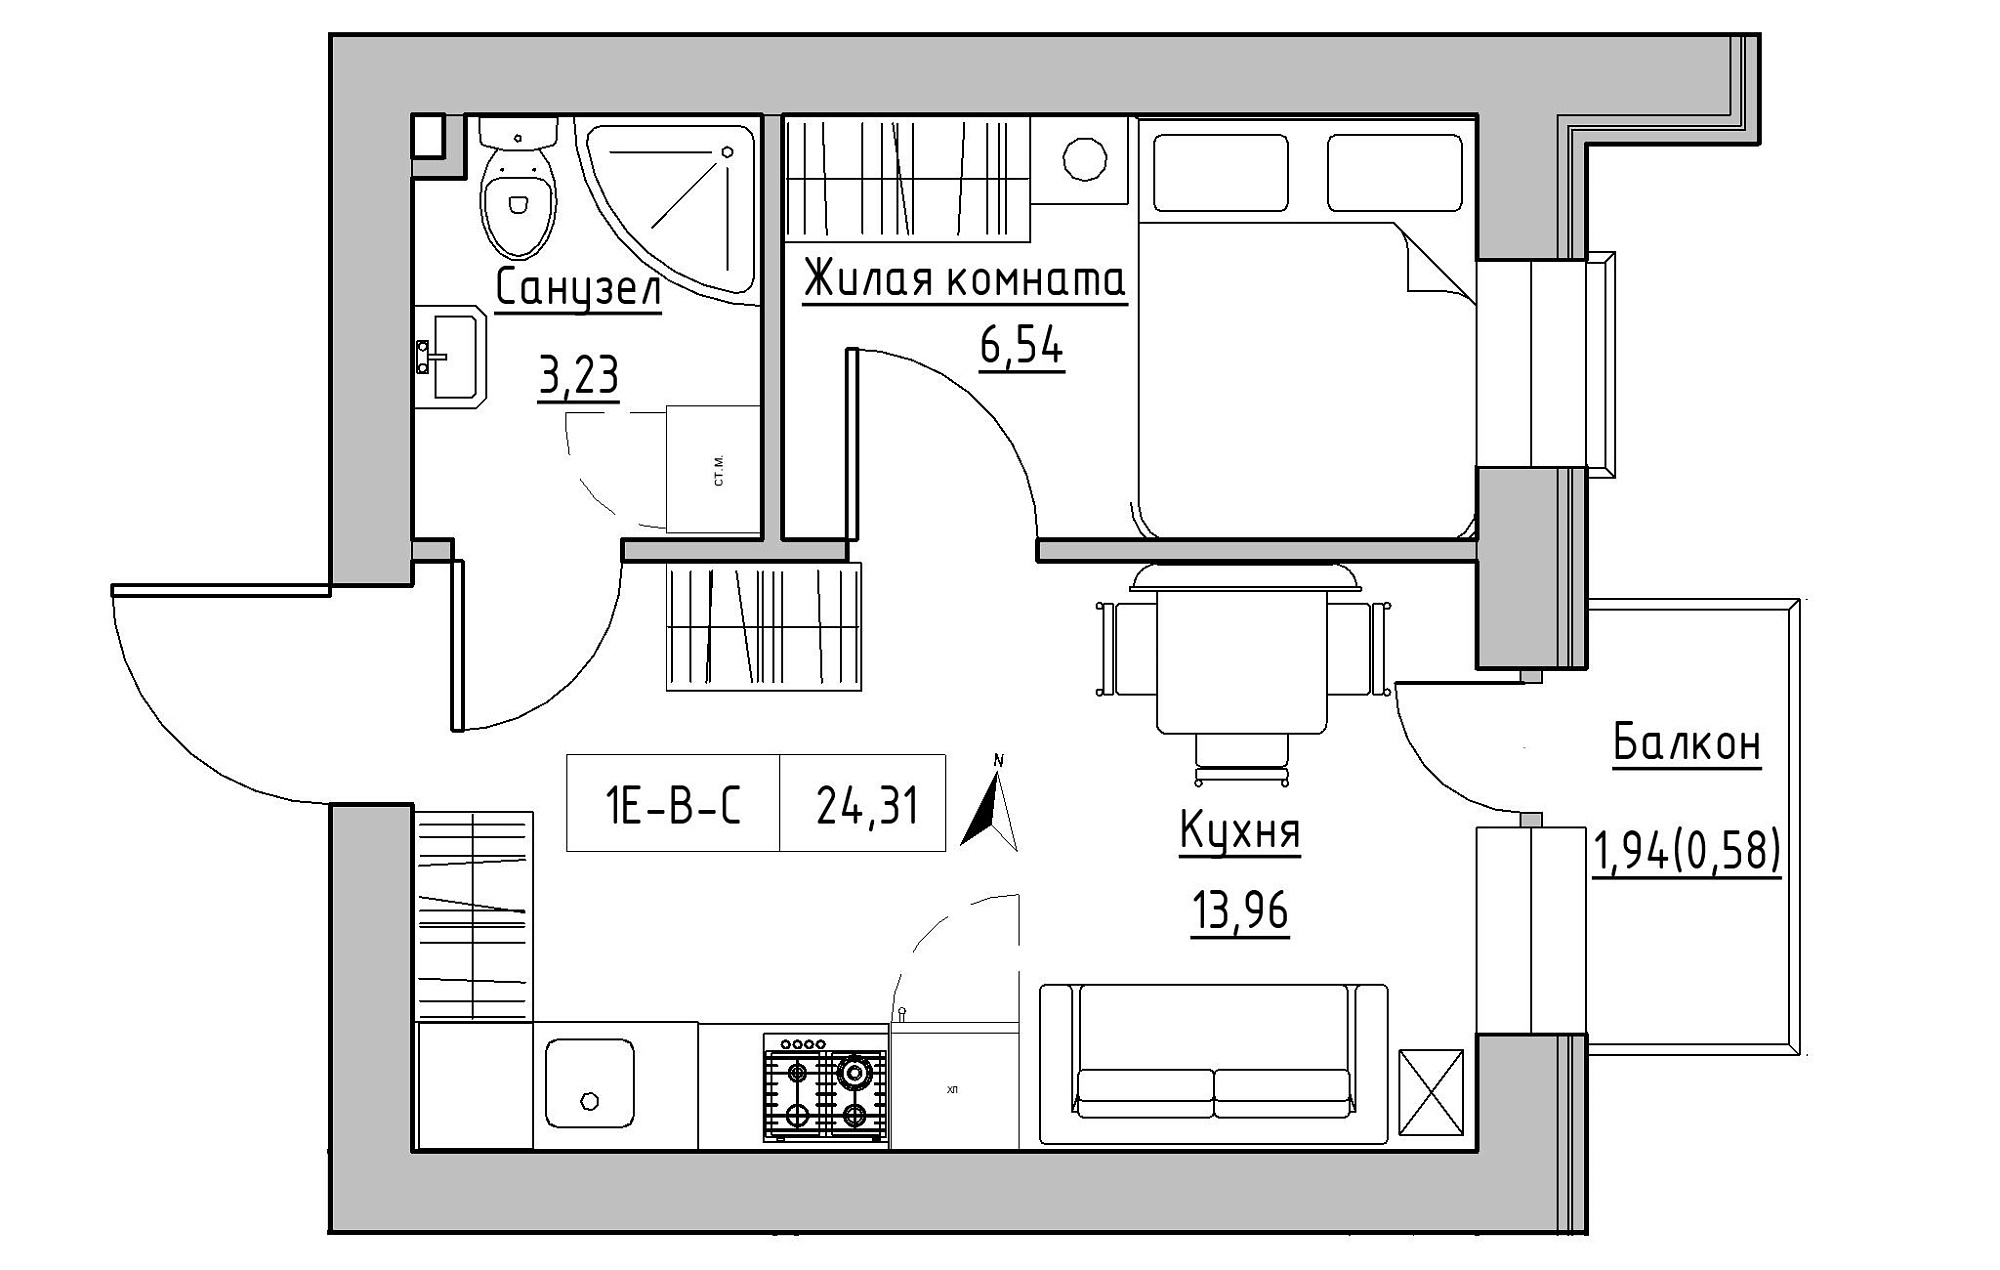 Planning 1-rm flats area 24.31m2, KS-019-03/0007.